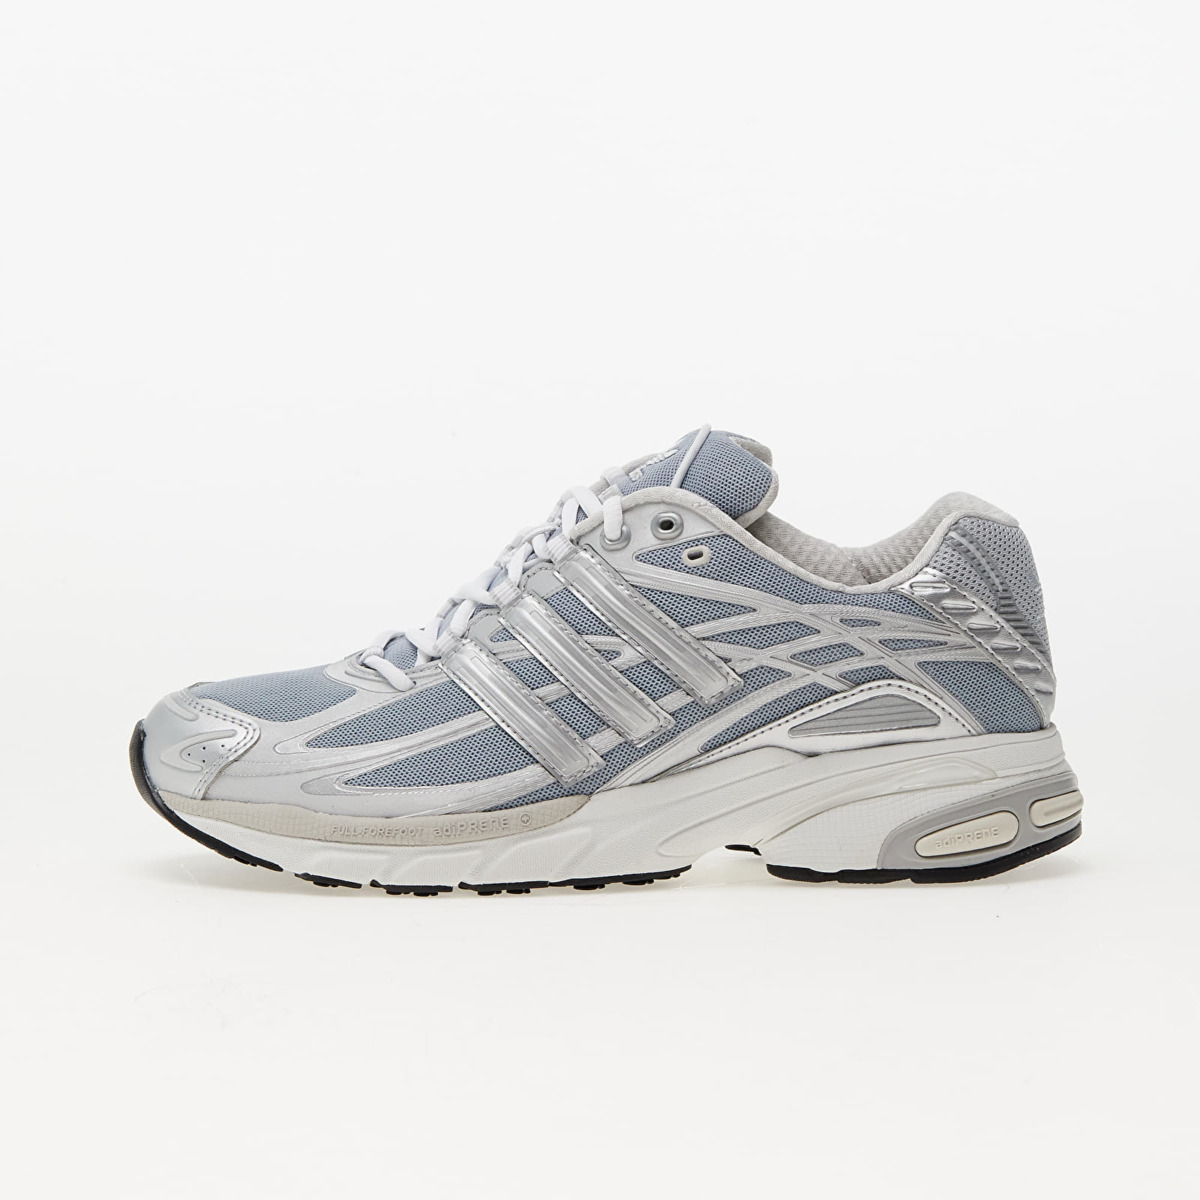 Adidas - Mens Adistar Running Shoes - Silver - Footshop GOOFASH